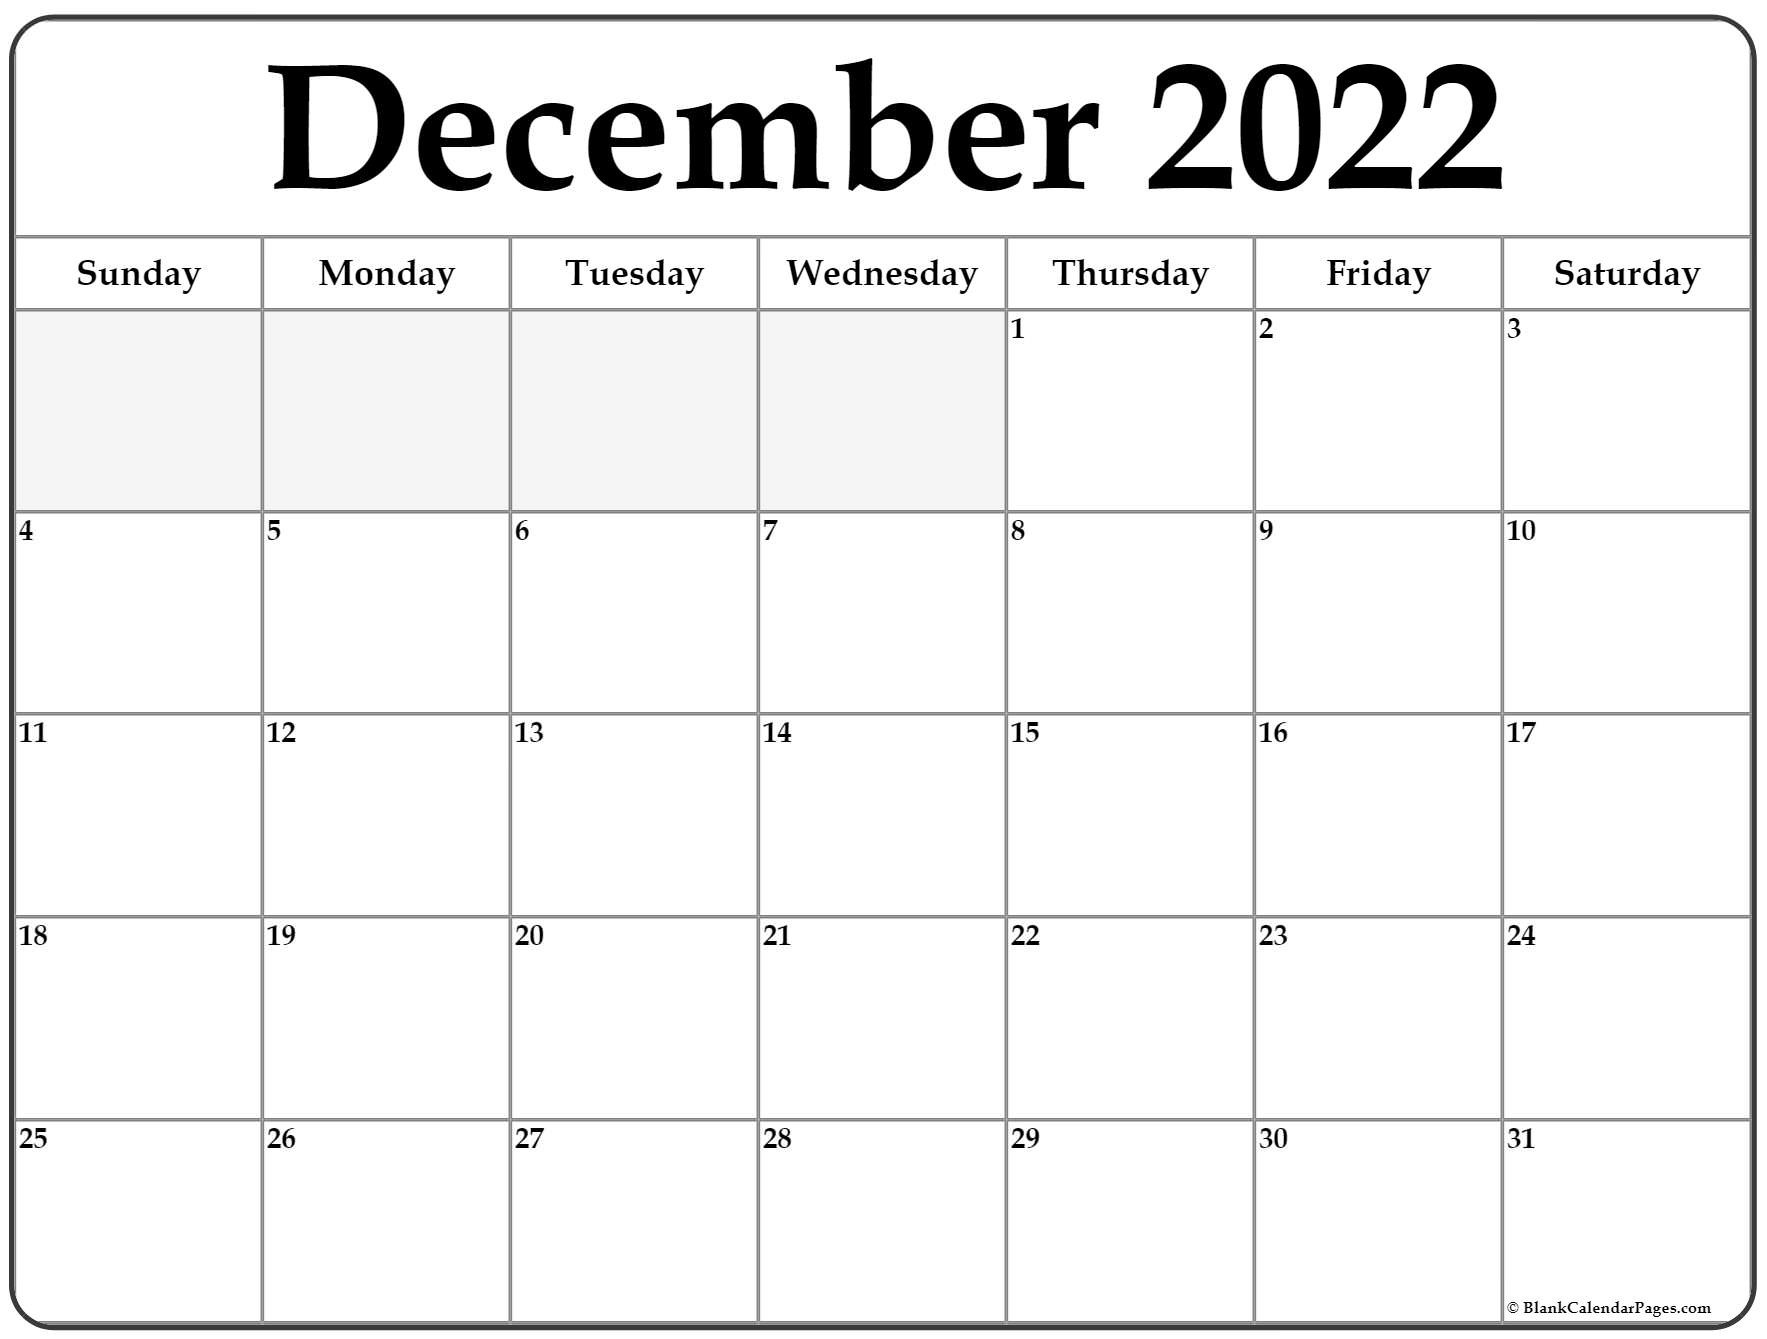 December 2022 Calendar | Free Printable Calendar Templates  Blank December 2022 And January 2022 Calendar